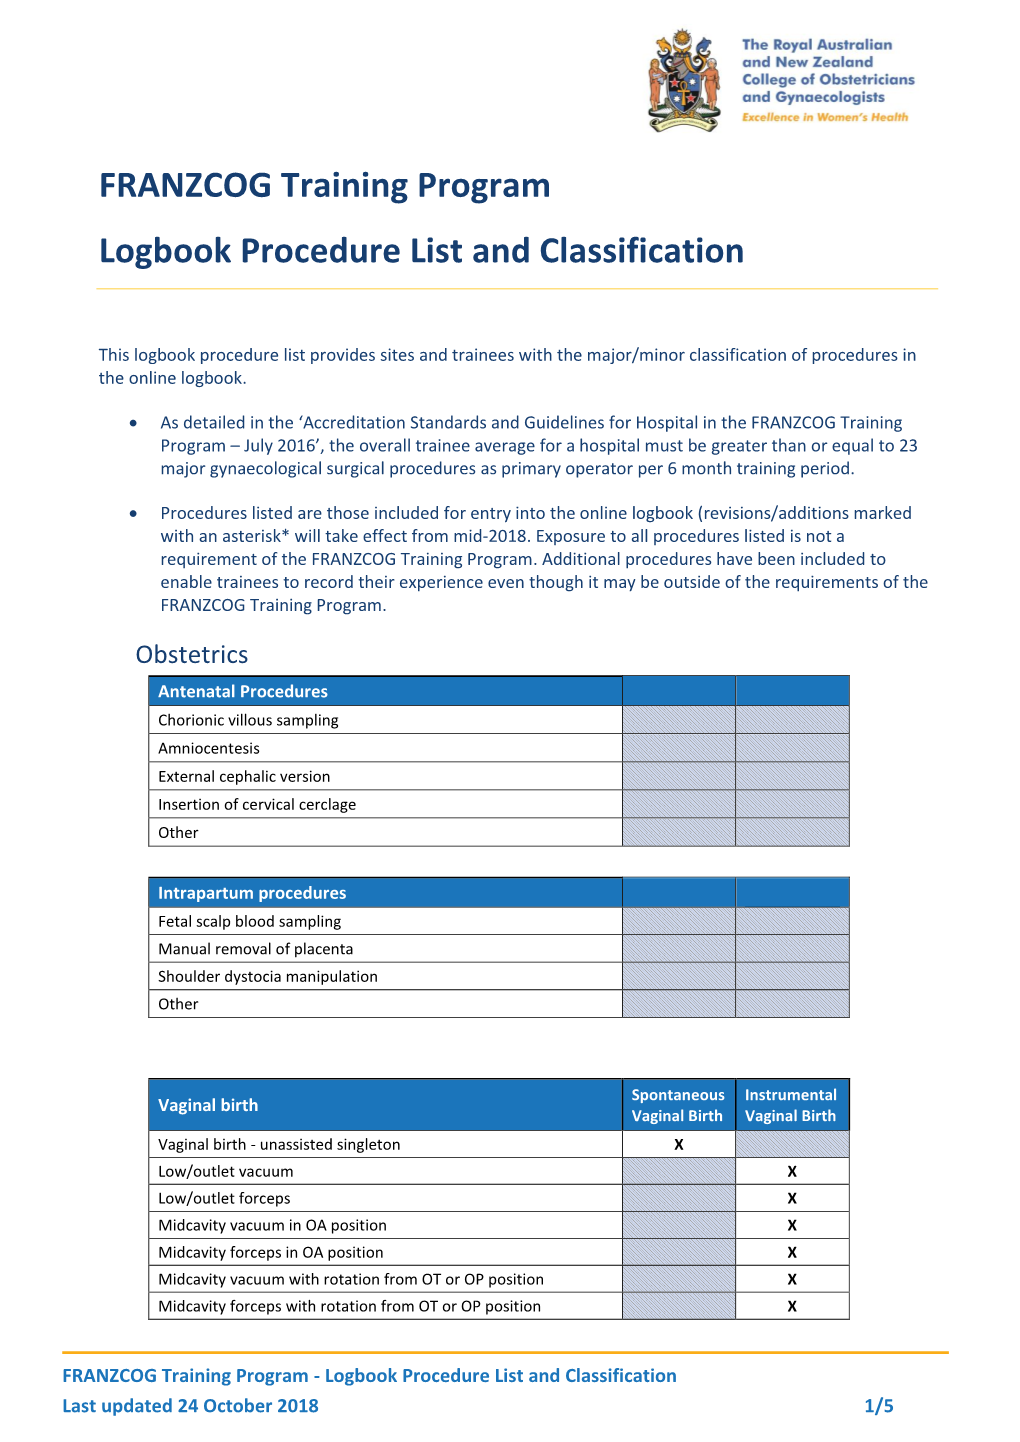 FRANZCOG Training Program Logbook Procedure List and Classification